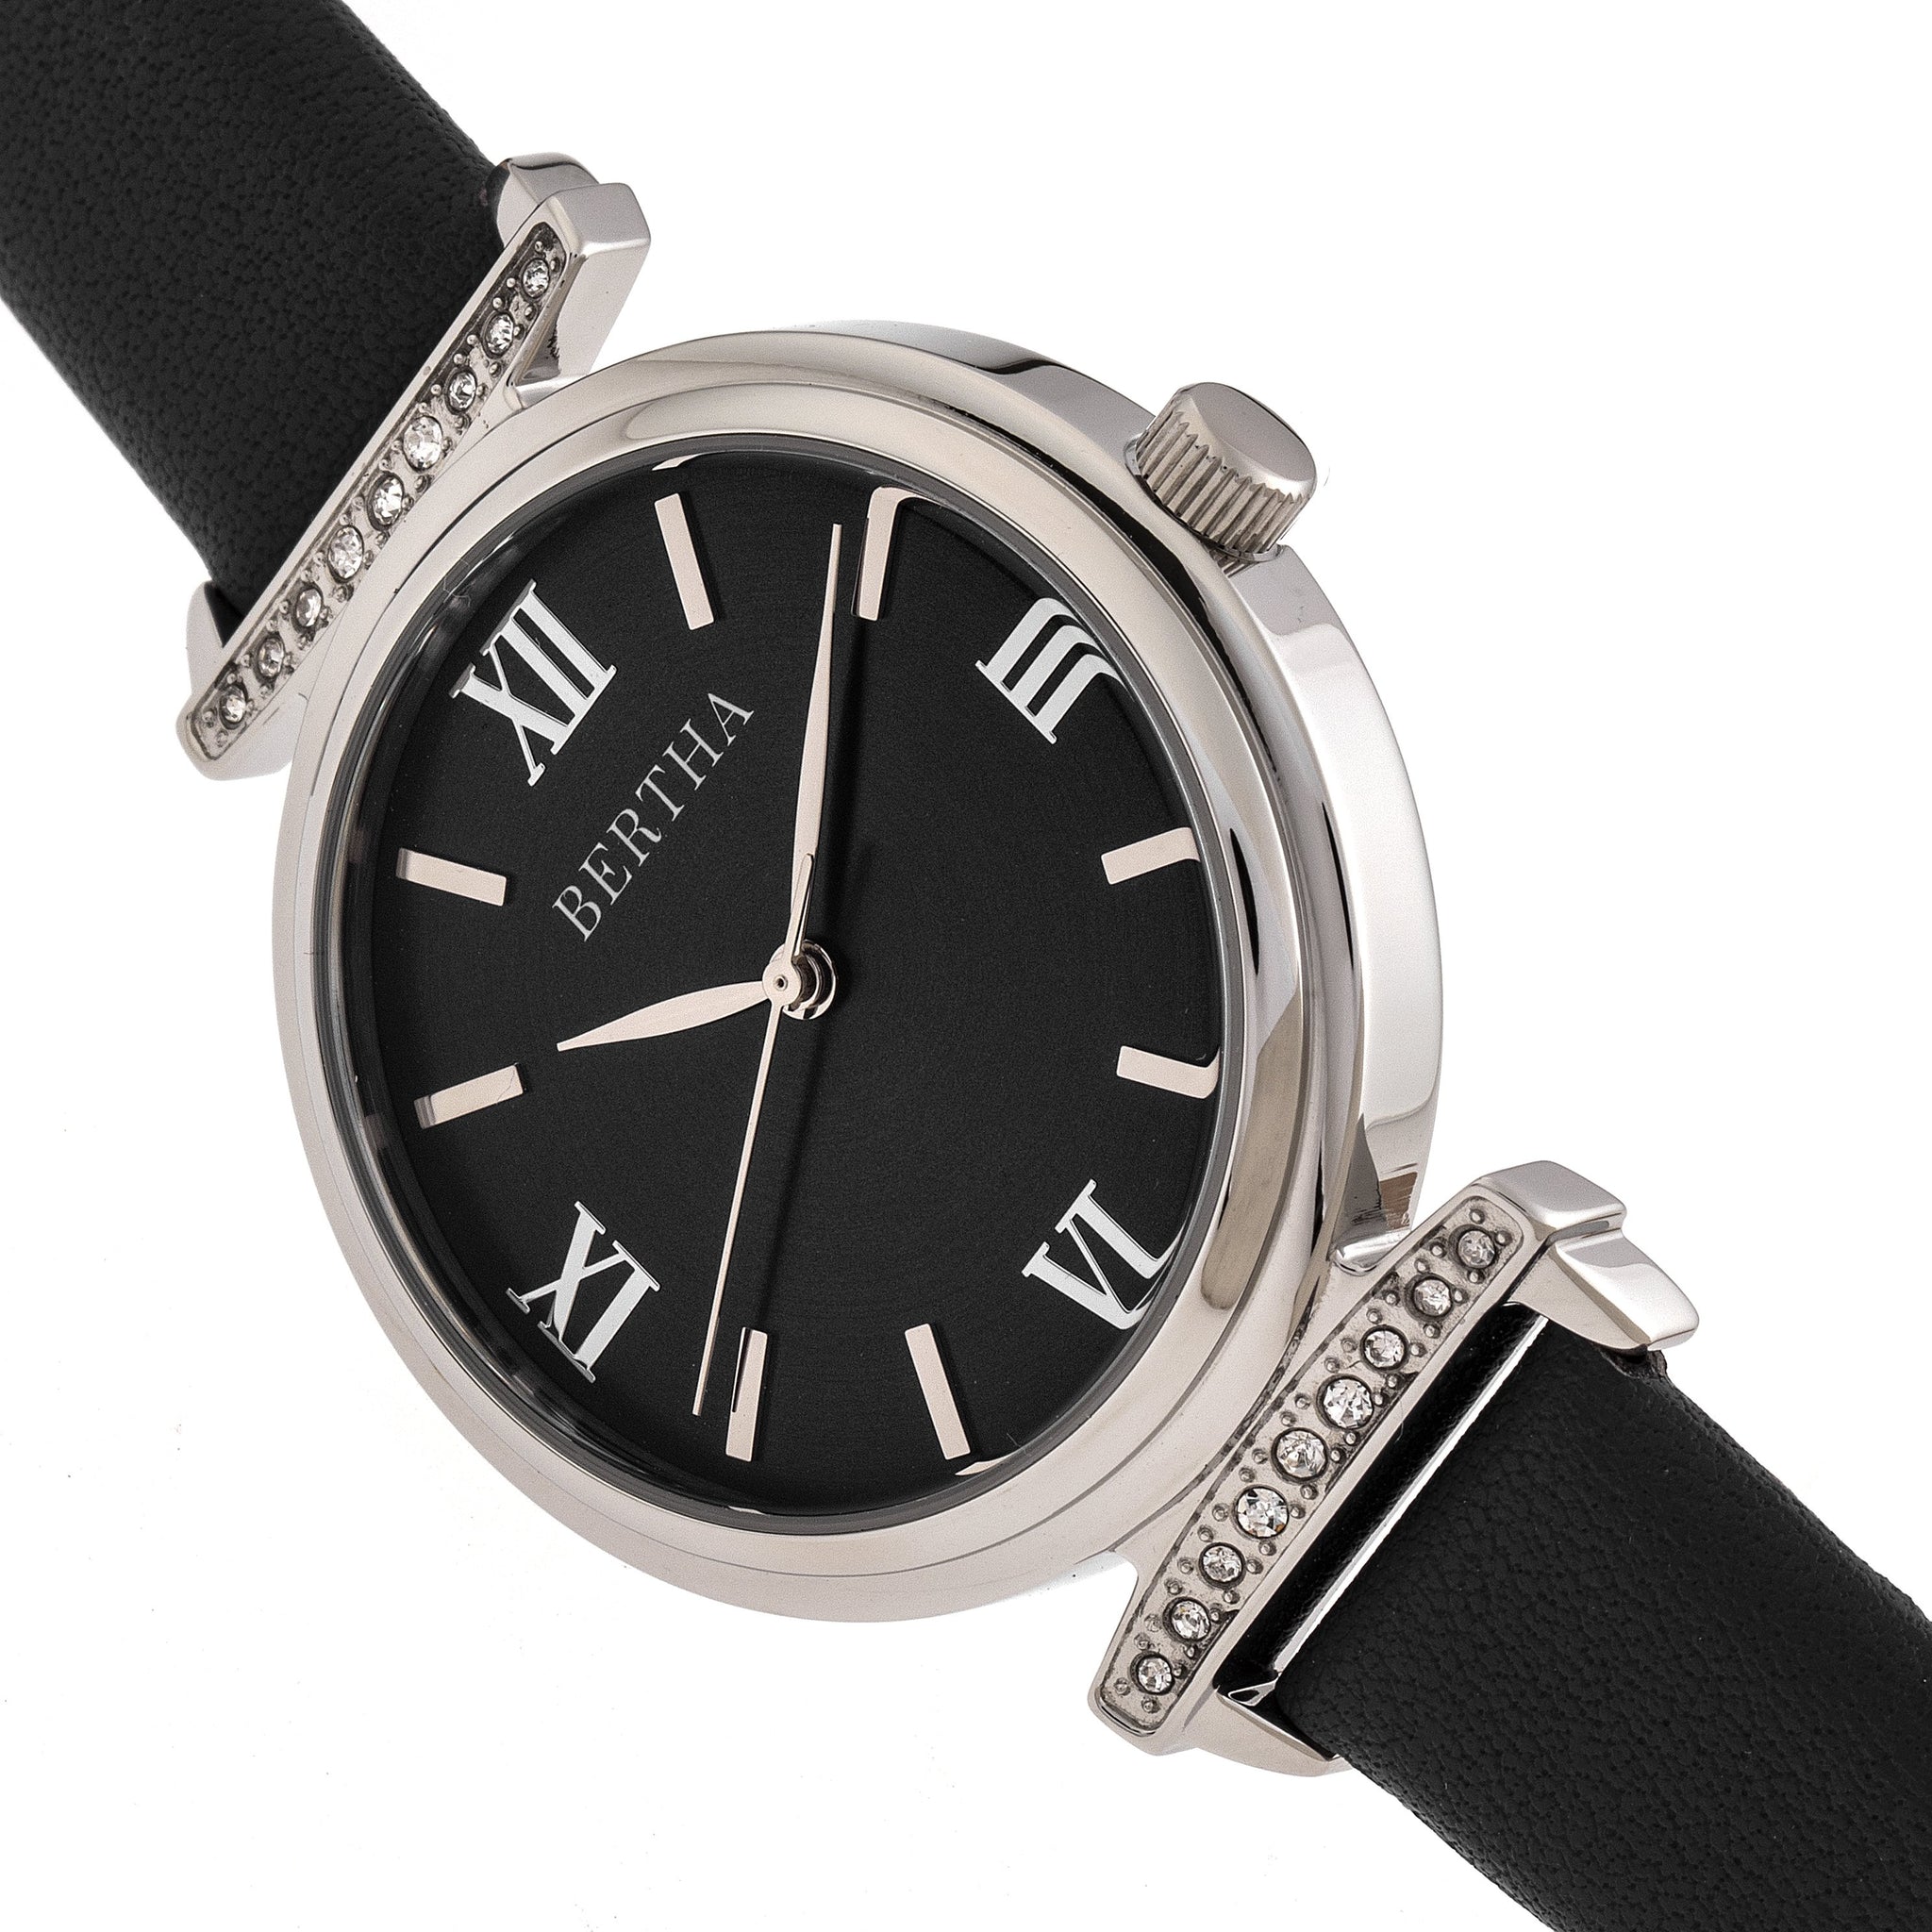 Bertha Jasmine Leather-Band Watch - Black - BTHBR9601